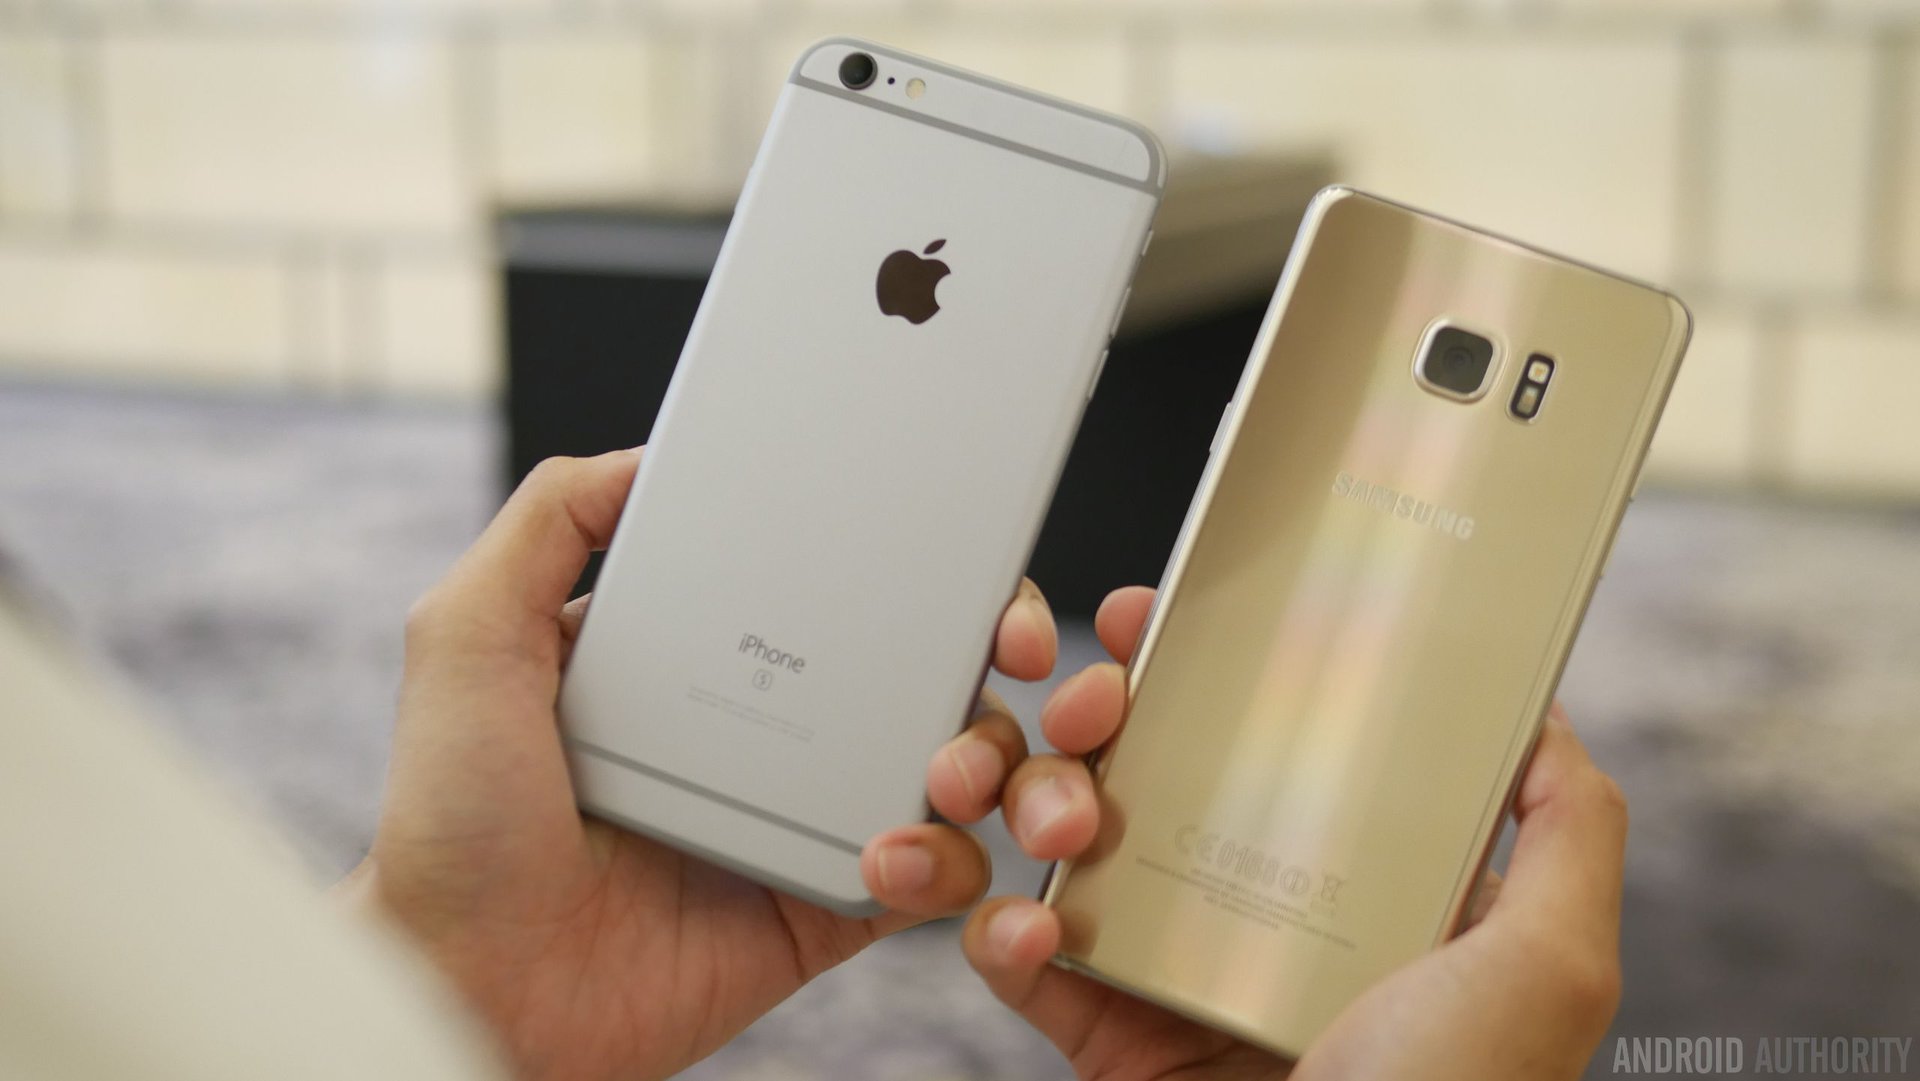 haag Bewijzen Winkelier Samsung Galaxy Note 7 vs iPhone 6s Plus first look - Android Authority